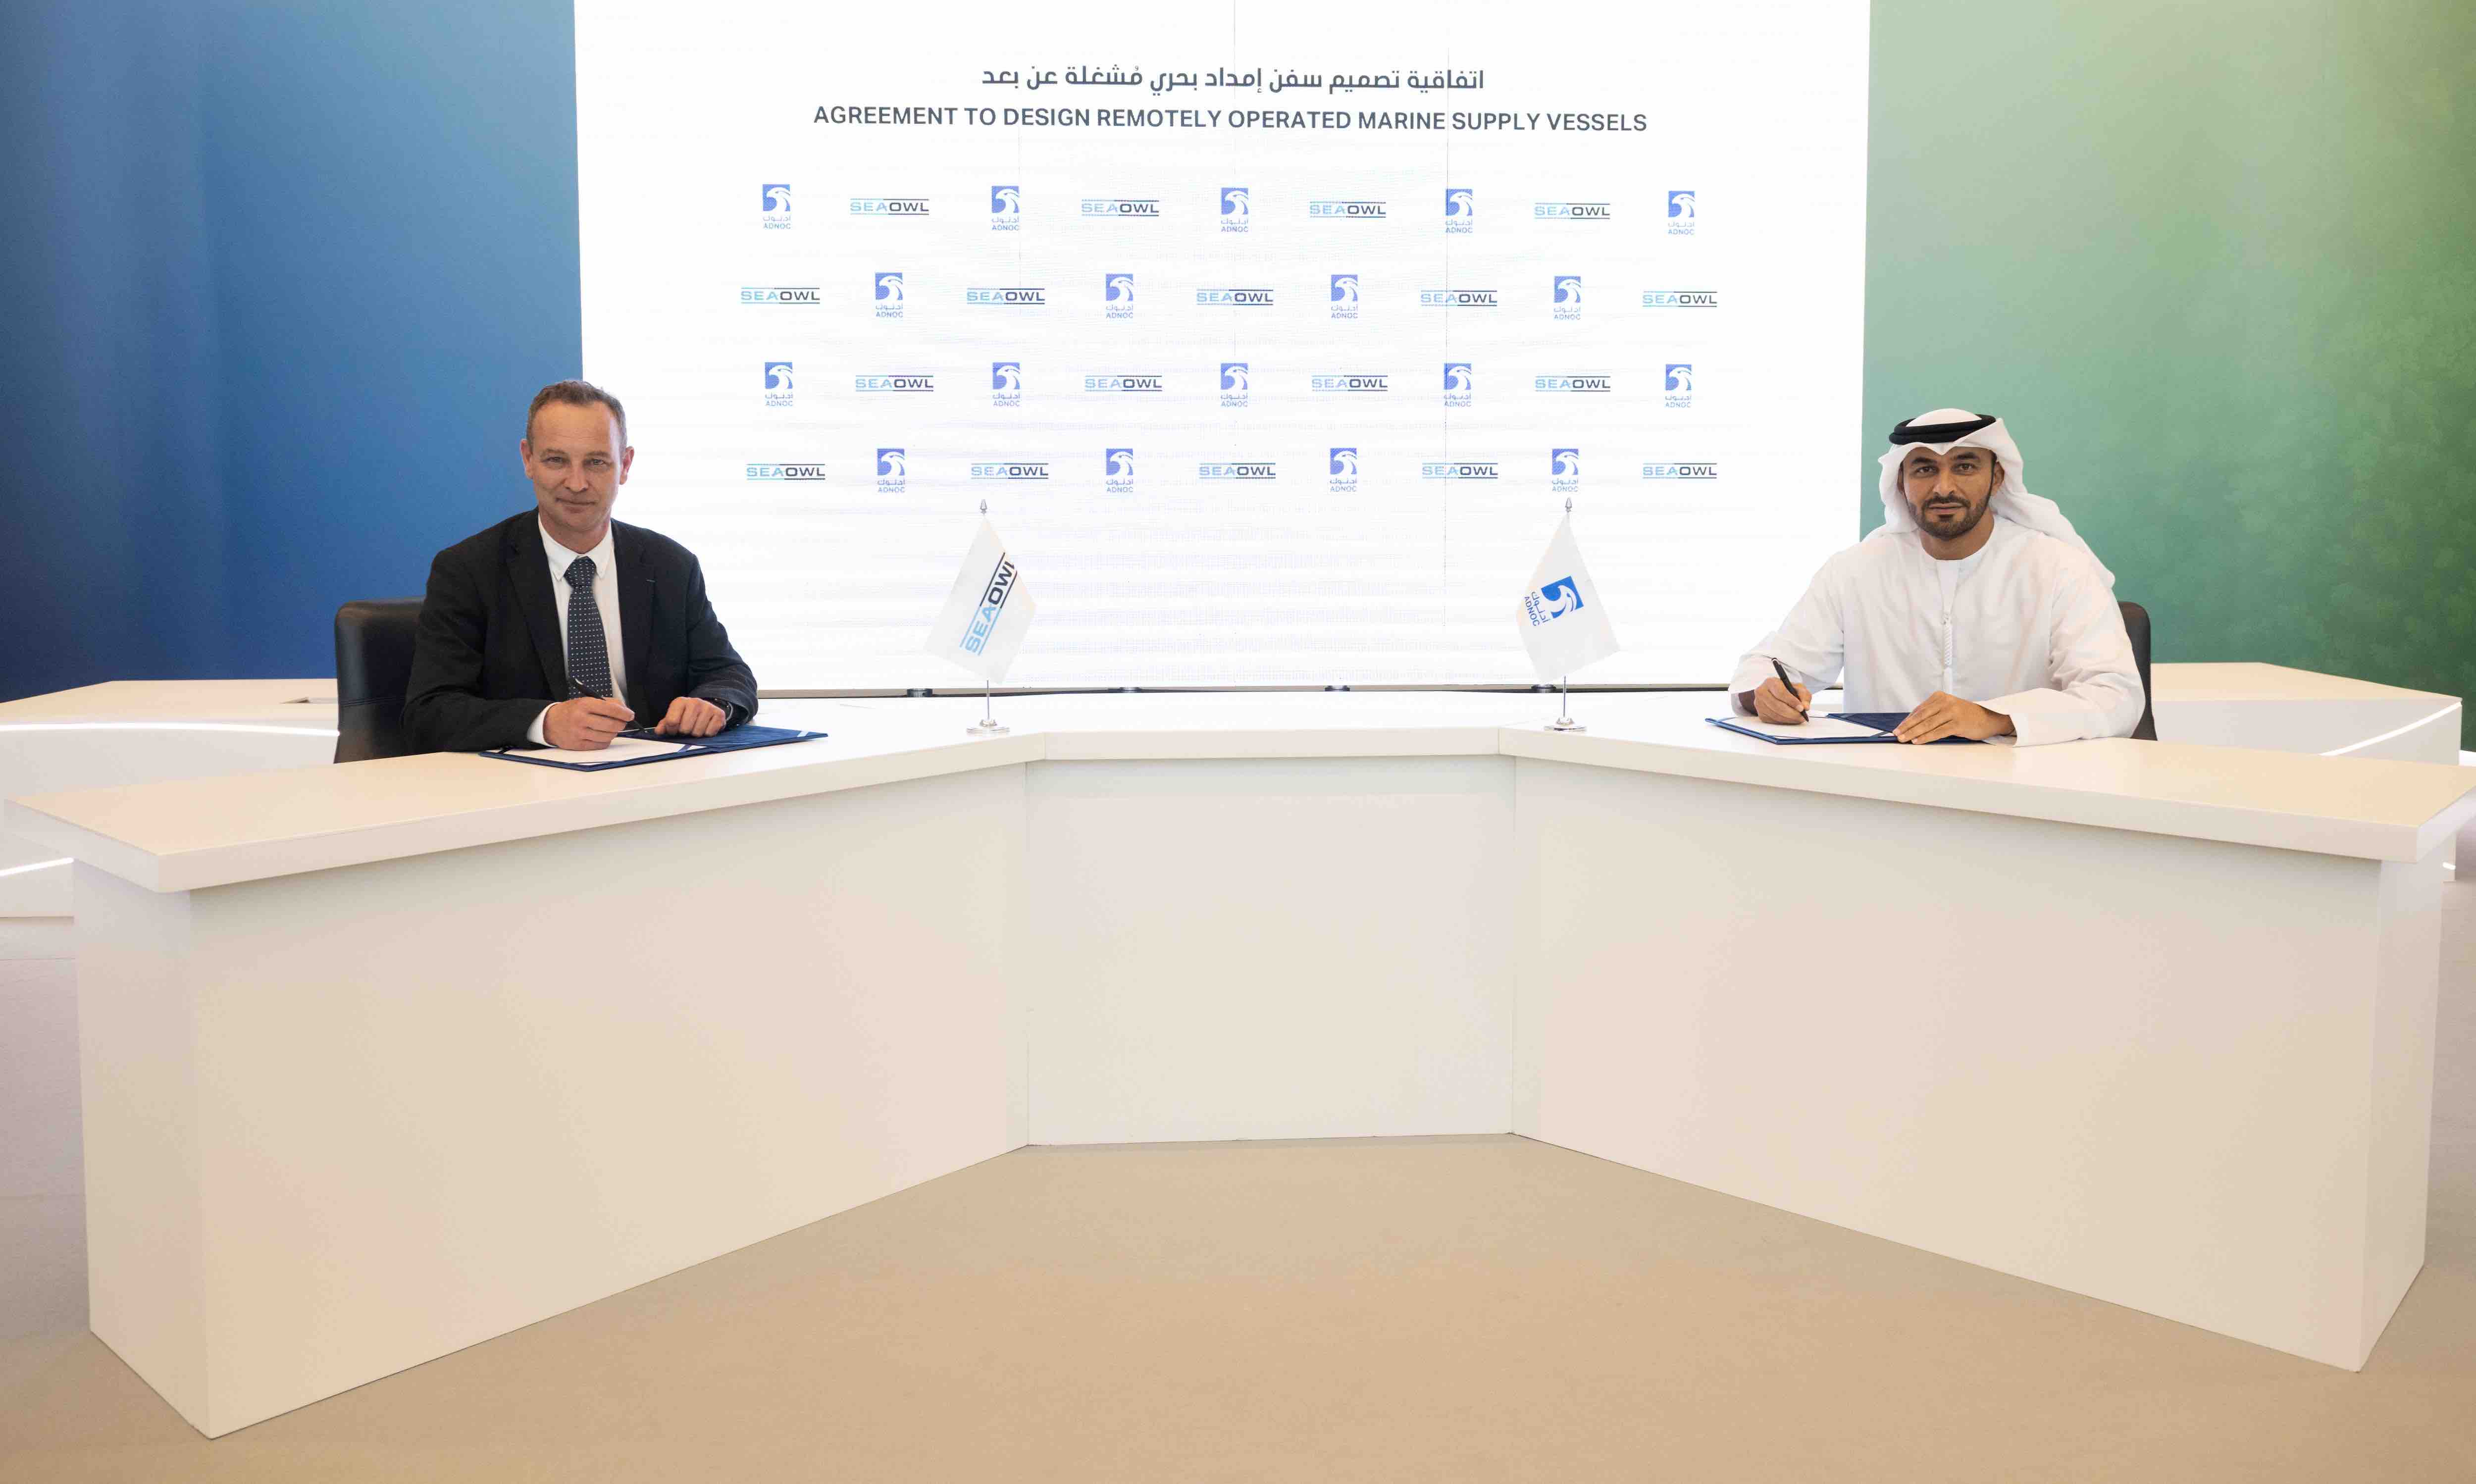 Signatories - Captain Abdulkareem Al Masabi, ADNOC L&S CEO and Xavier Génin, CEO, SeaOwl